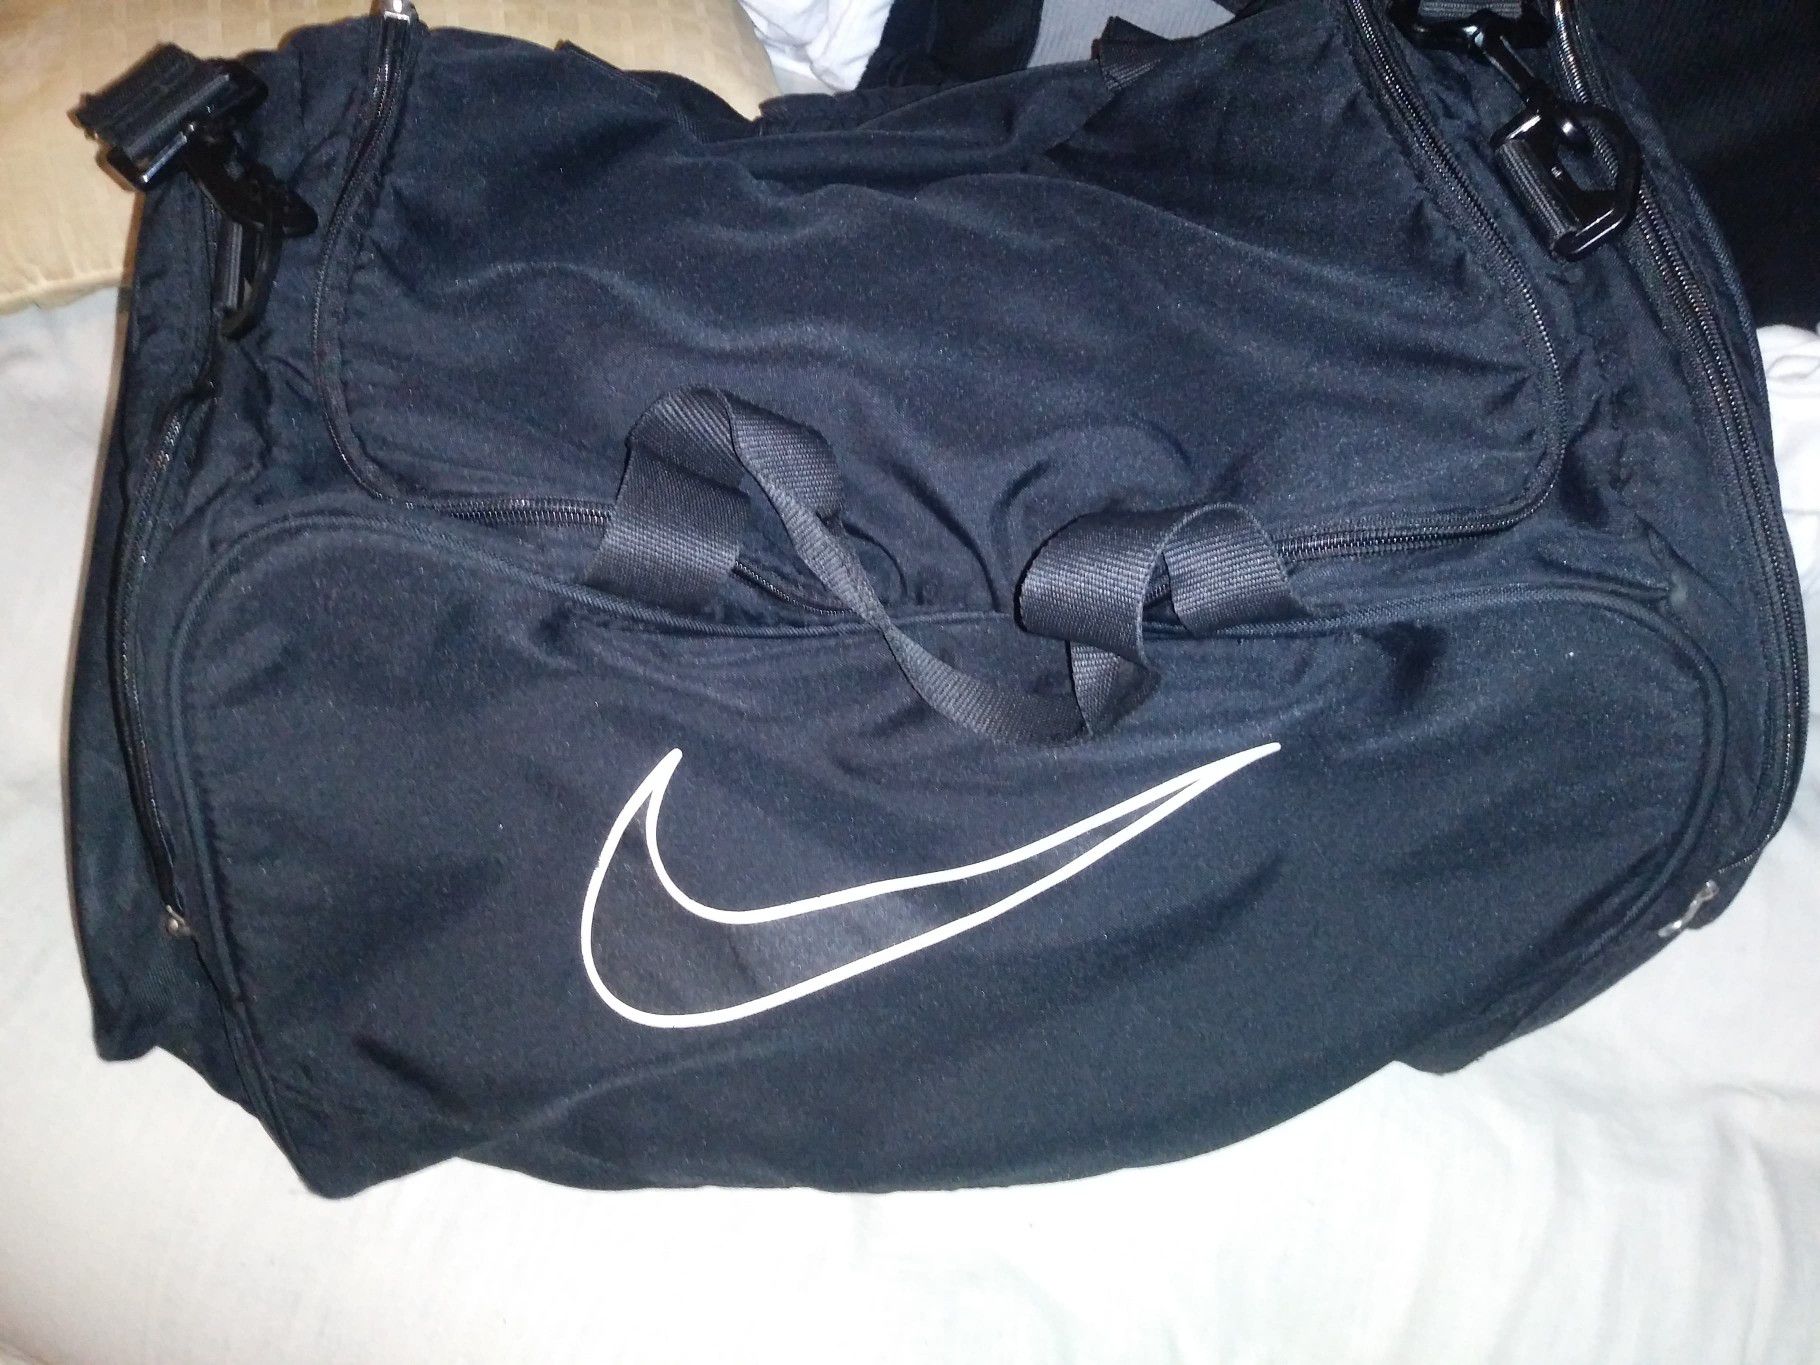 Large Nike duffle bag